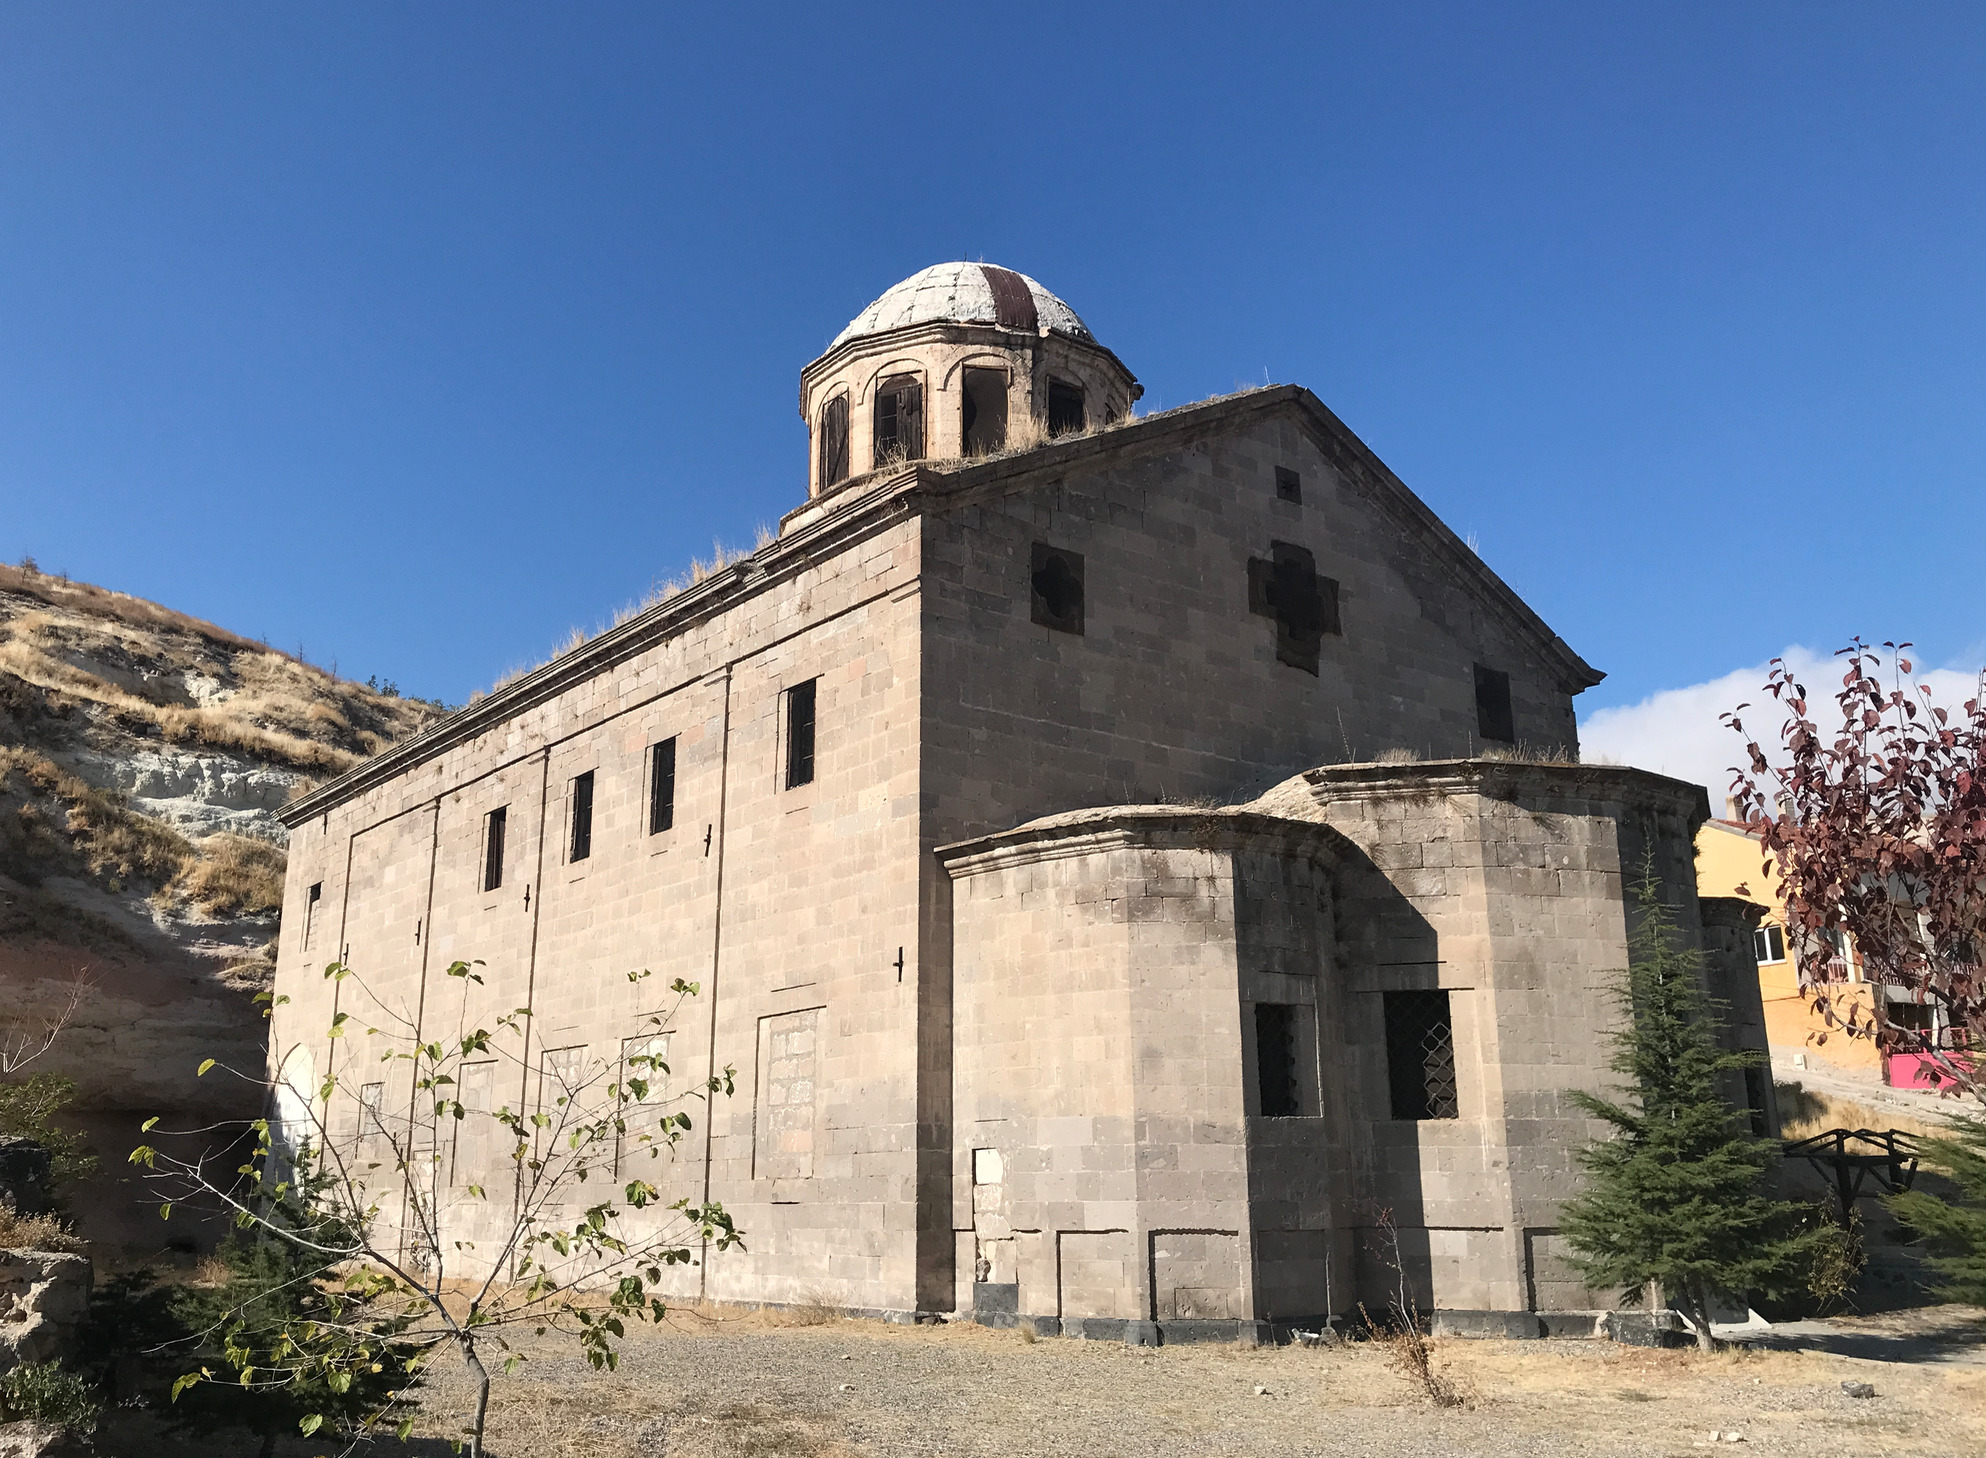 aziz dimitrios kirken Gülsehir, oplevelser i Gülsehir, oplevelser i kappadokien, oplevelser i Cappadocia, kirker i Tyrkiet, Kirker i Kappadokien,